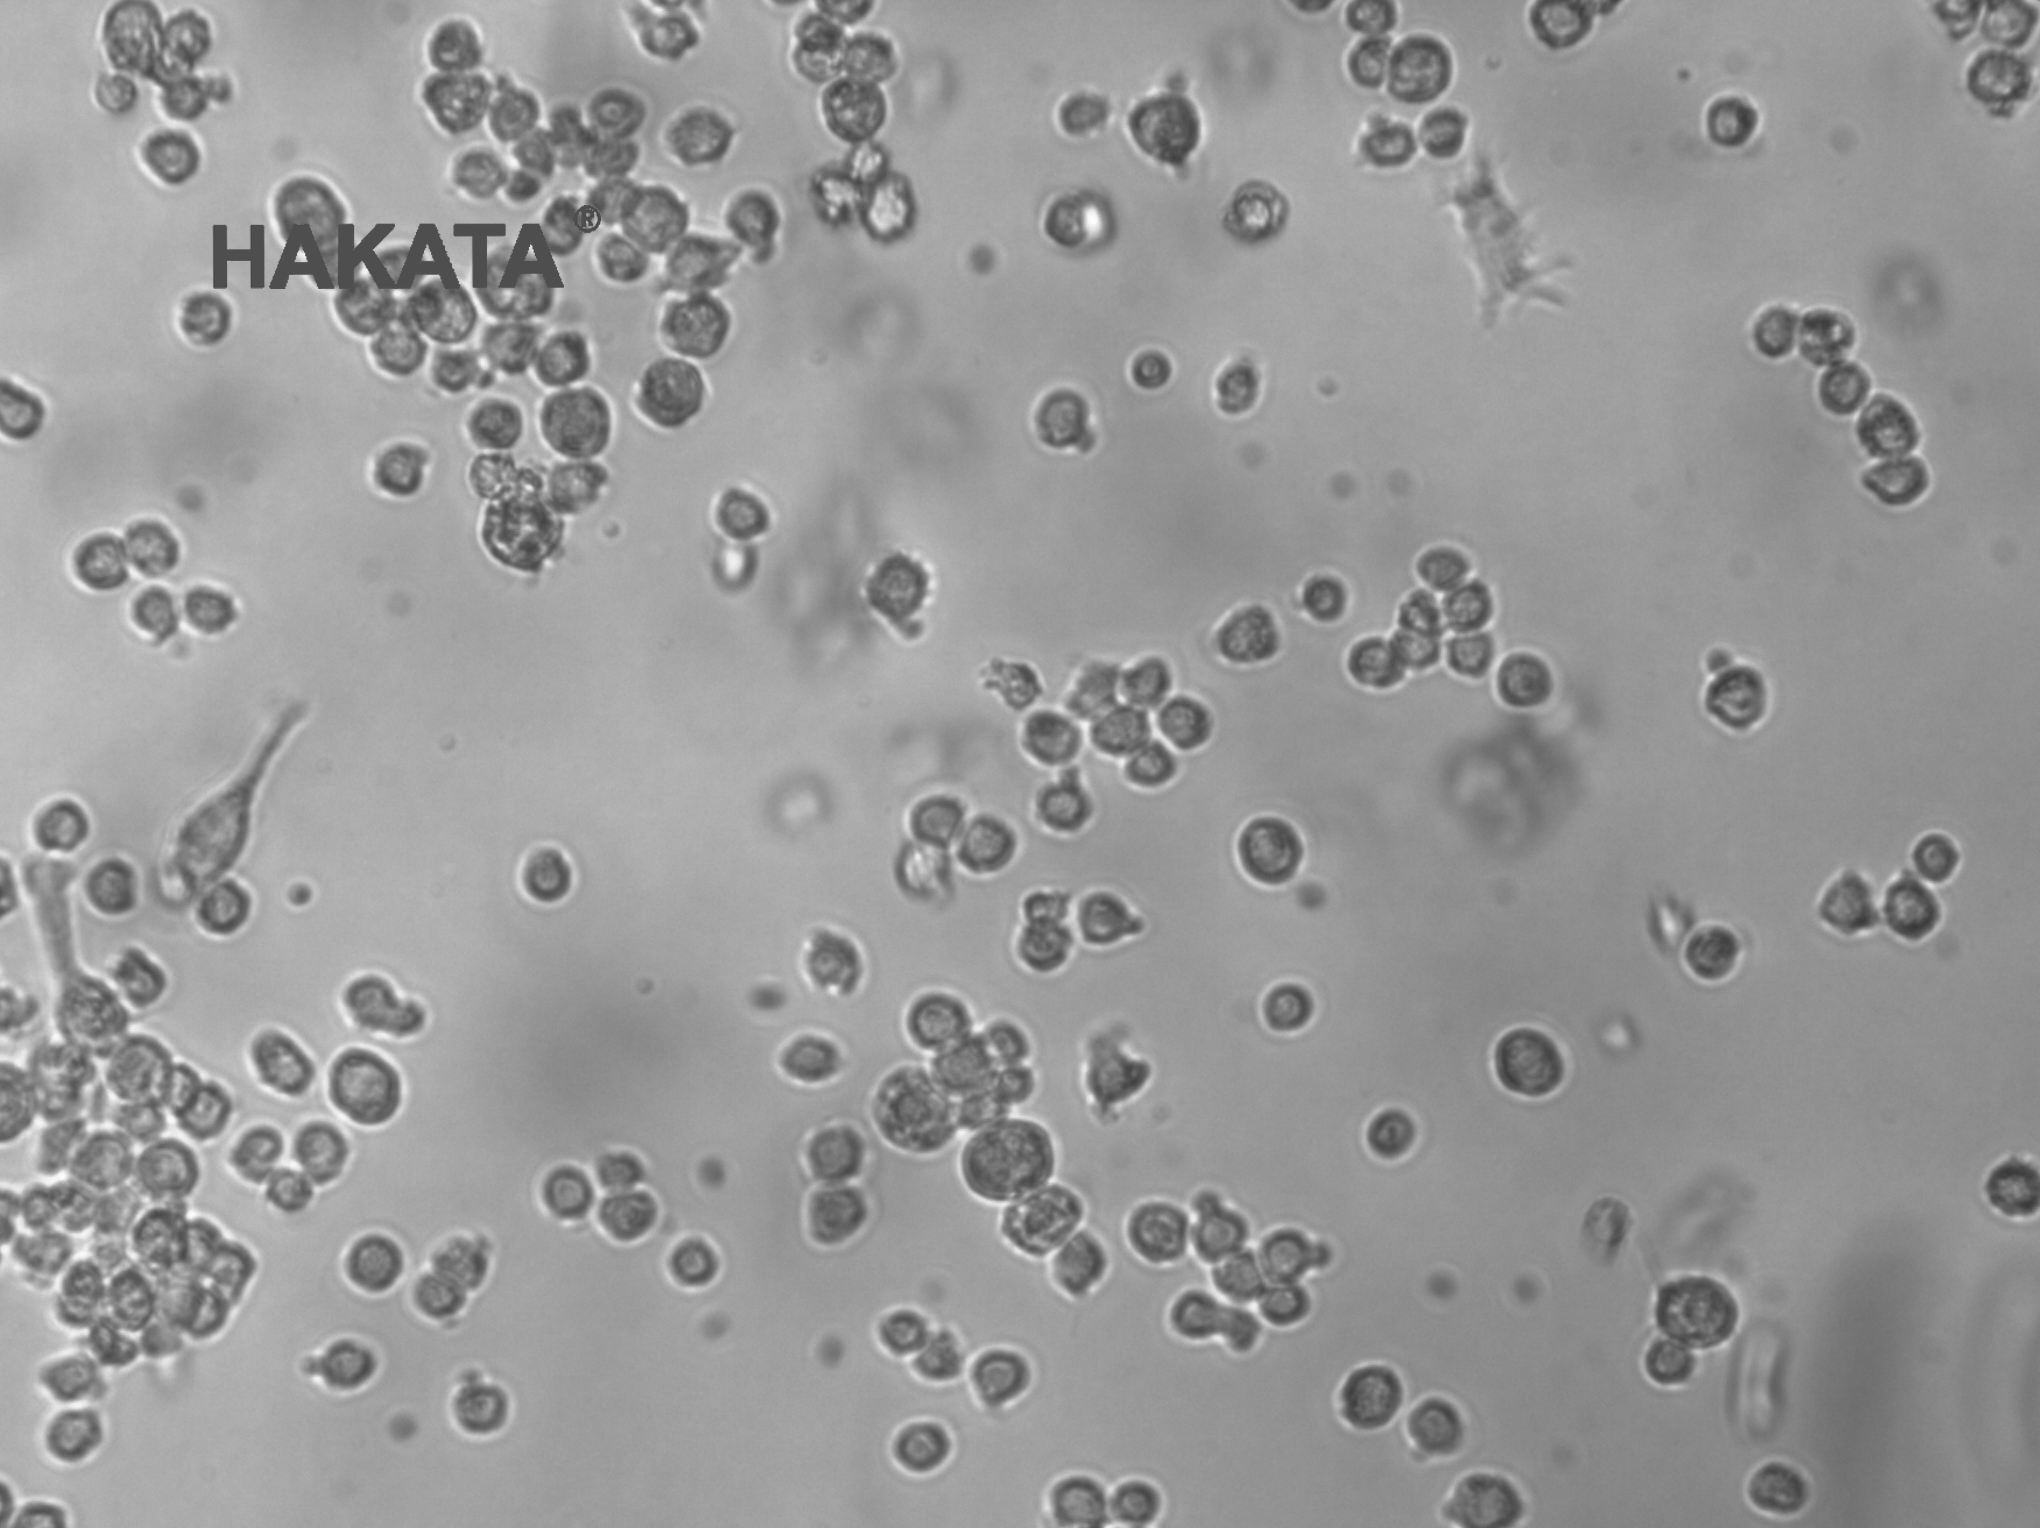 Bv-2细胞,小鼠小胶质瘤细胞；Bv-2,Bv-2细胞小鼠小胶质瘤细胞；Bv-2